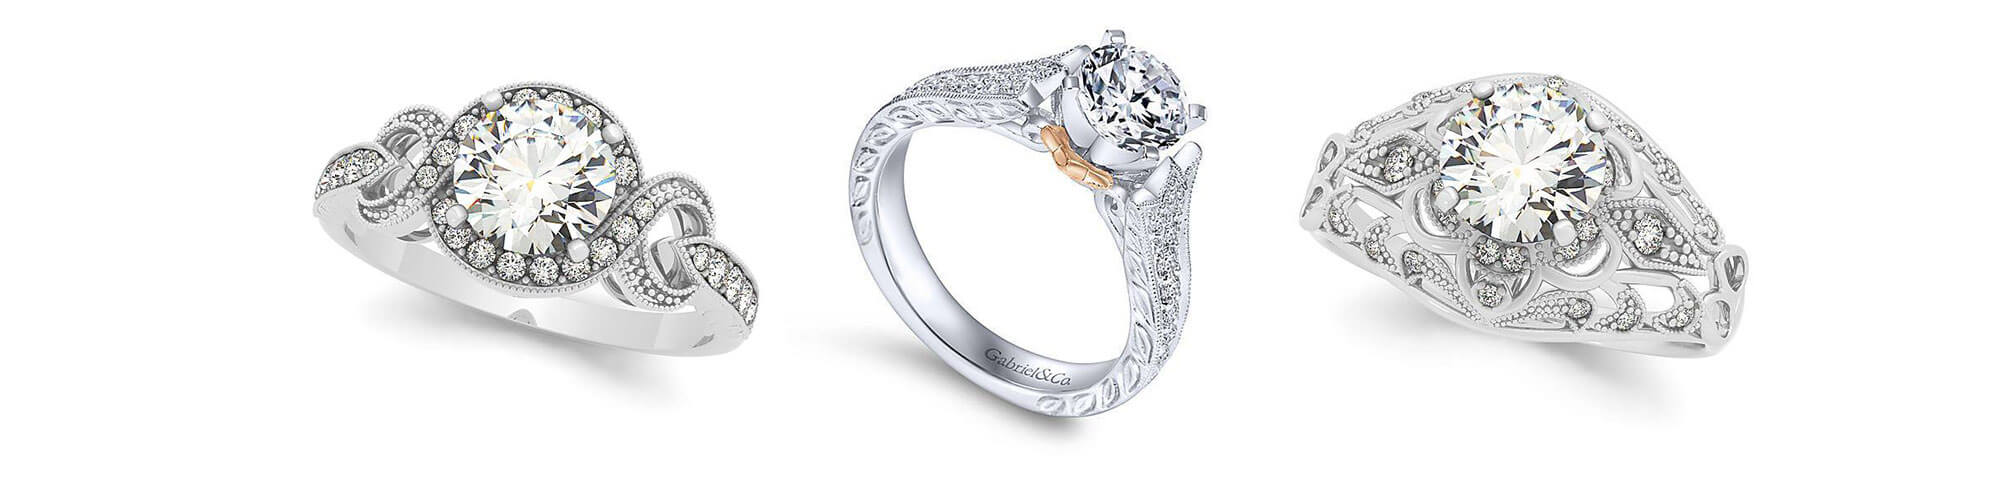 Three different silver diamond rings